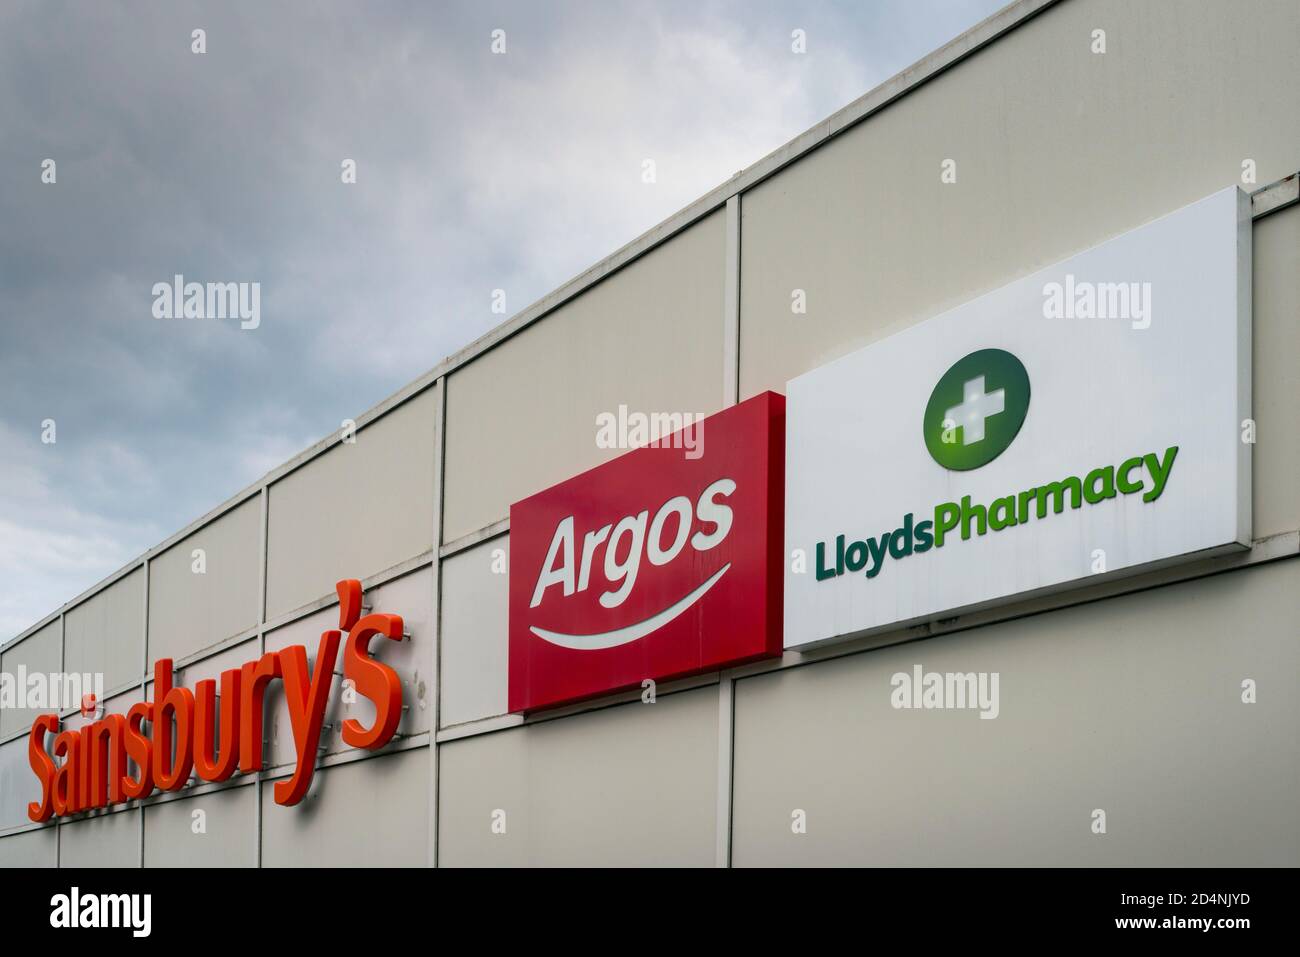 Sainsbury's Supermarket Building with Argos and Lloyds Pharmacy Signs & Logos Stock Photo